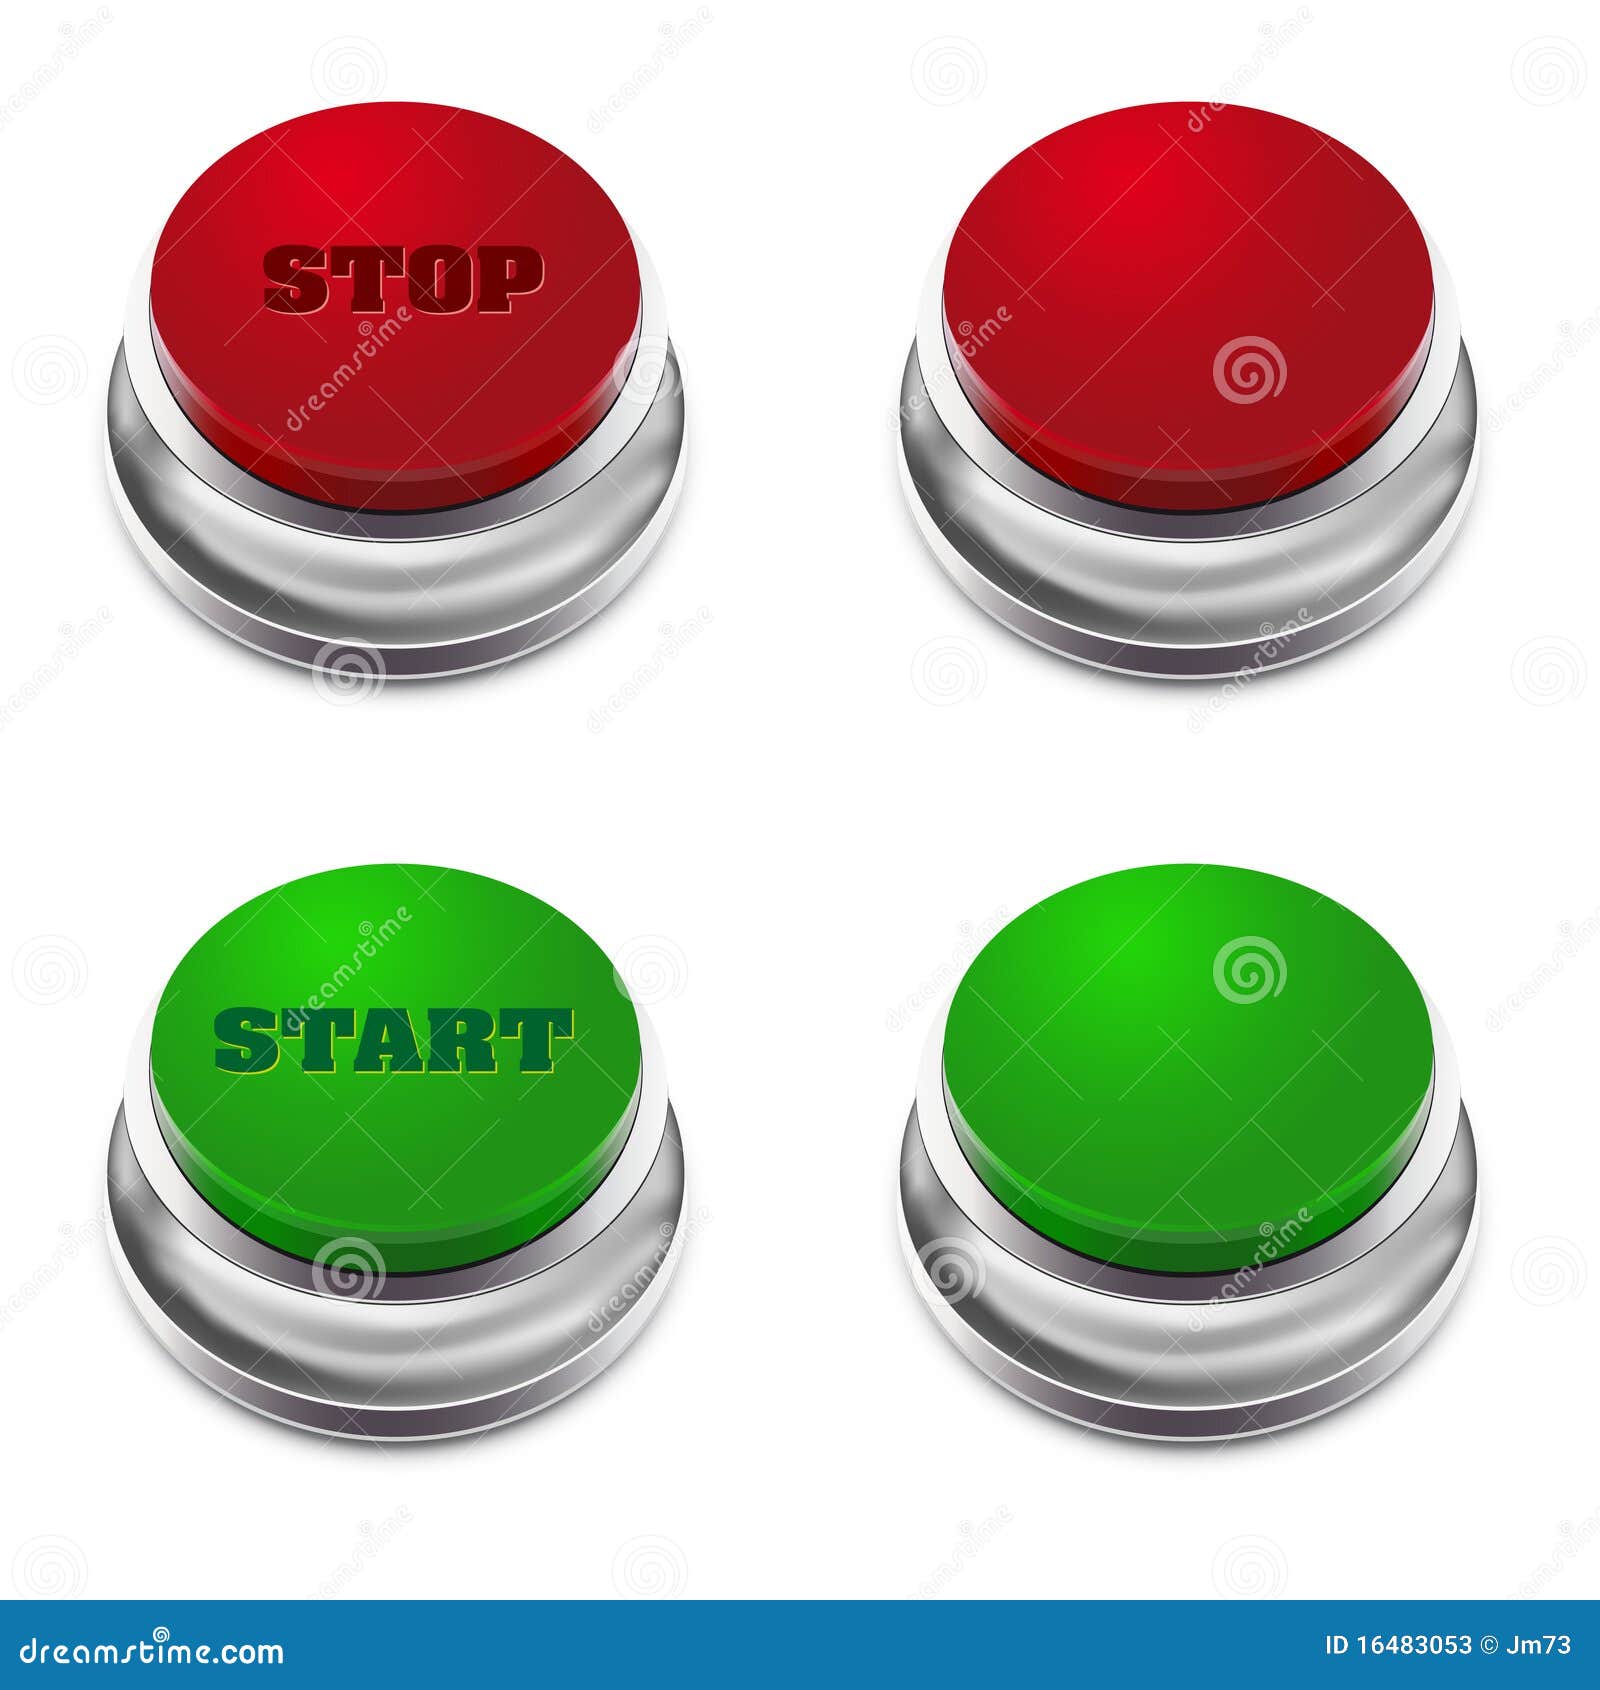 Красная кнопка старт. Кнопка старт. Красная кнопка и зелёная кнопка. Красная кнопка пуск.